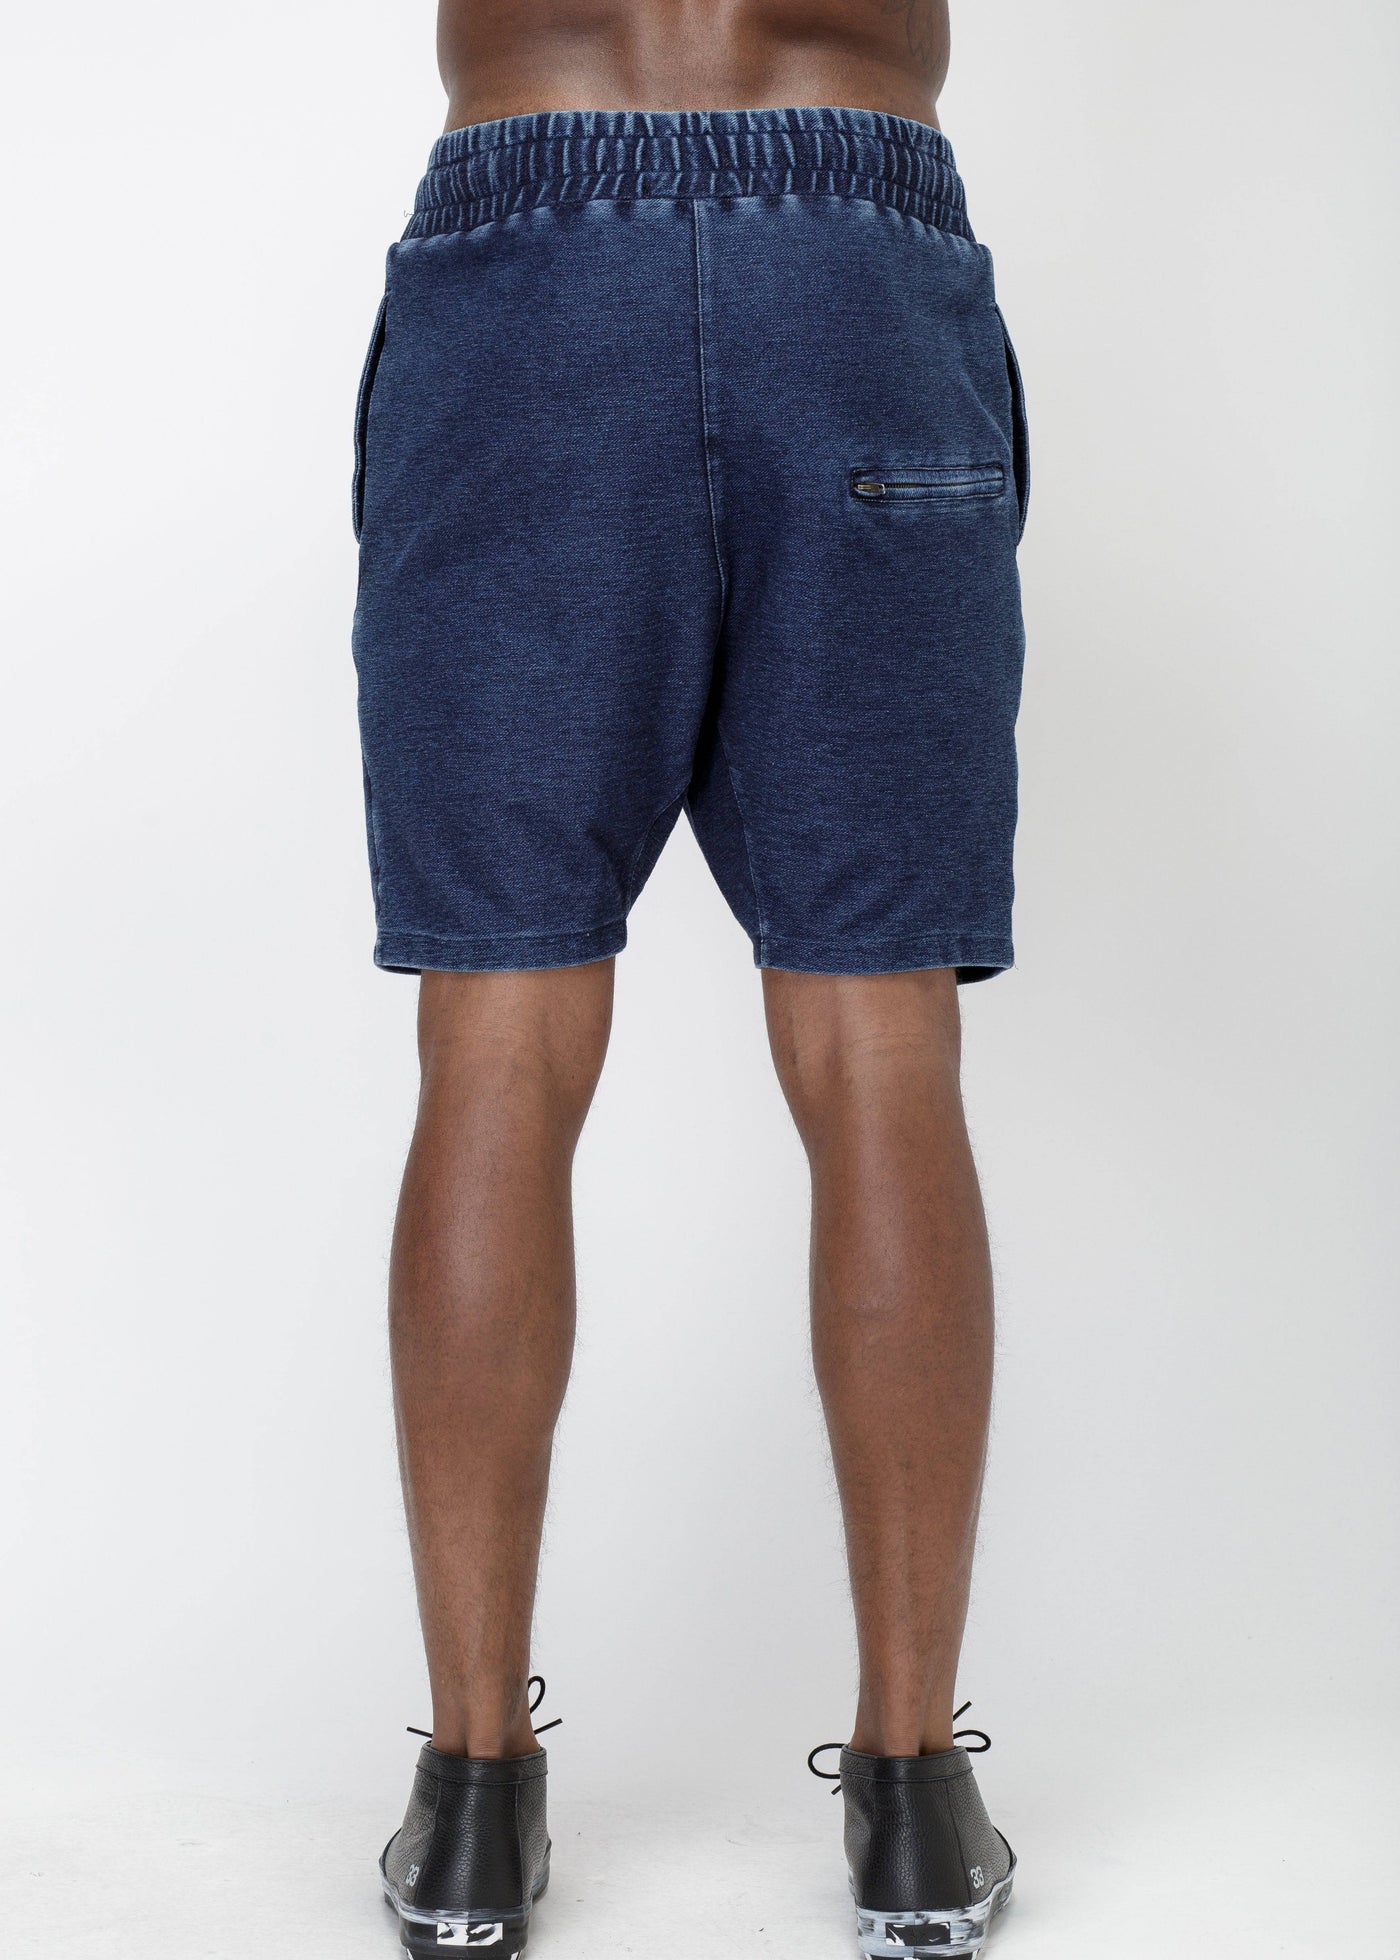 Konus Men's Heavy Denim Knit Shorts in Blue by Shop at Konus